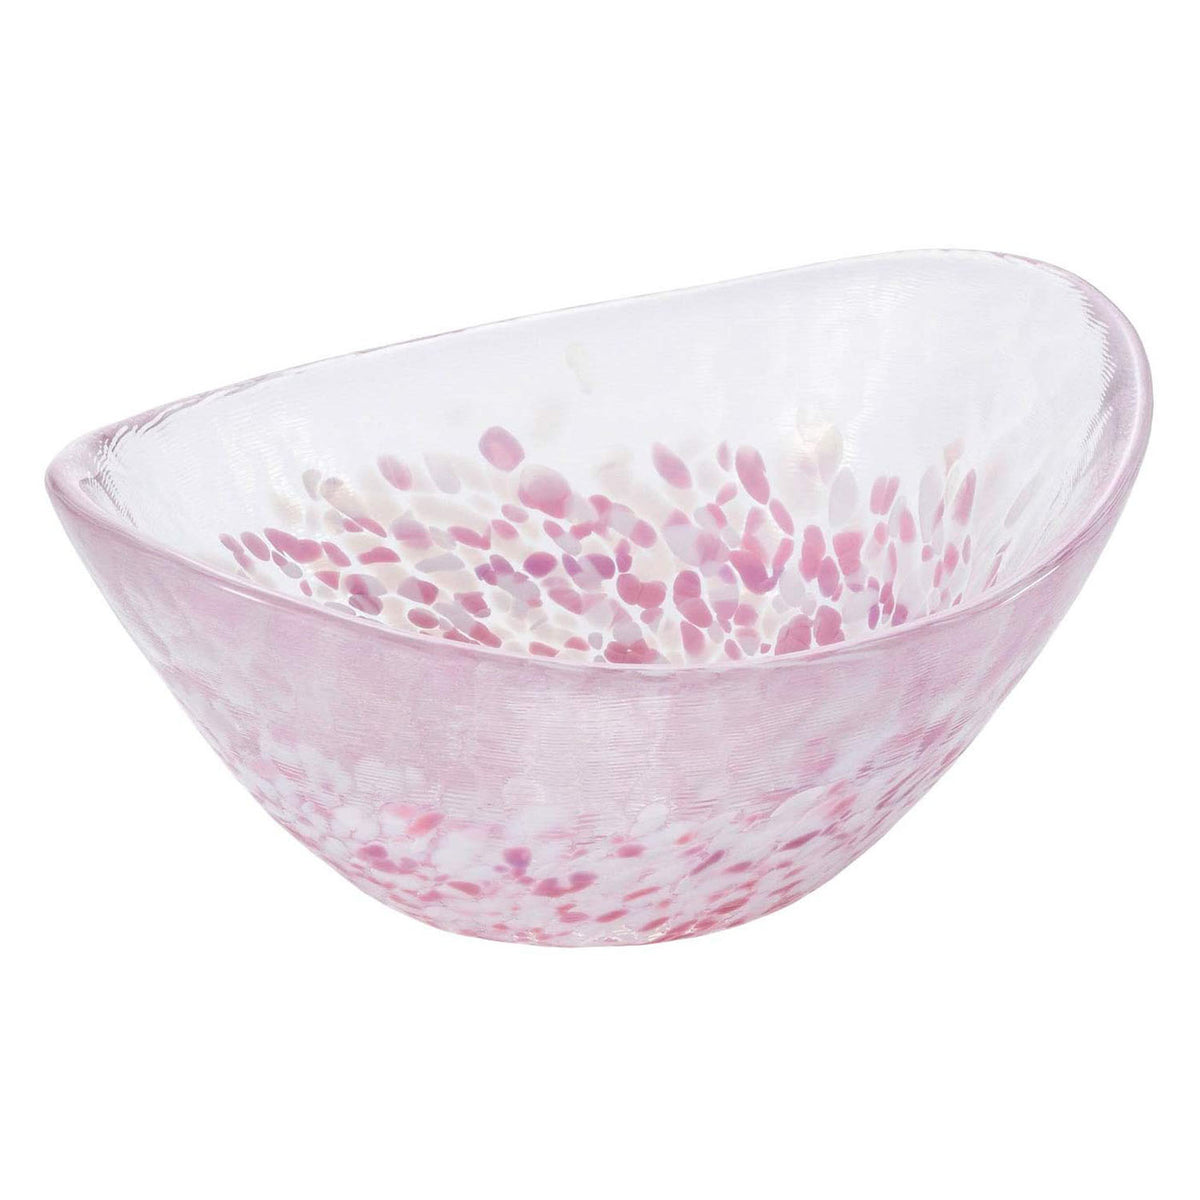 ADERIA Tsugaru Vidro Soda-Lime Glass Oval Sakura Small Bowl